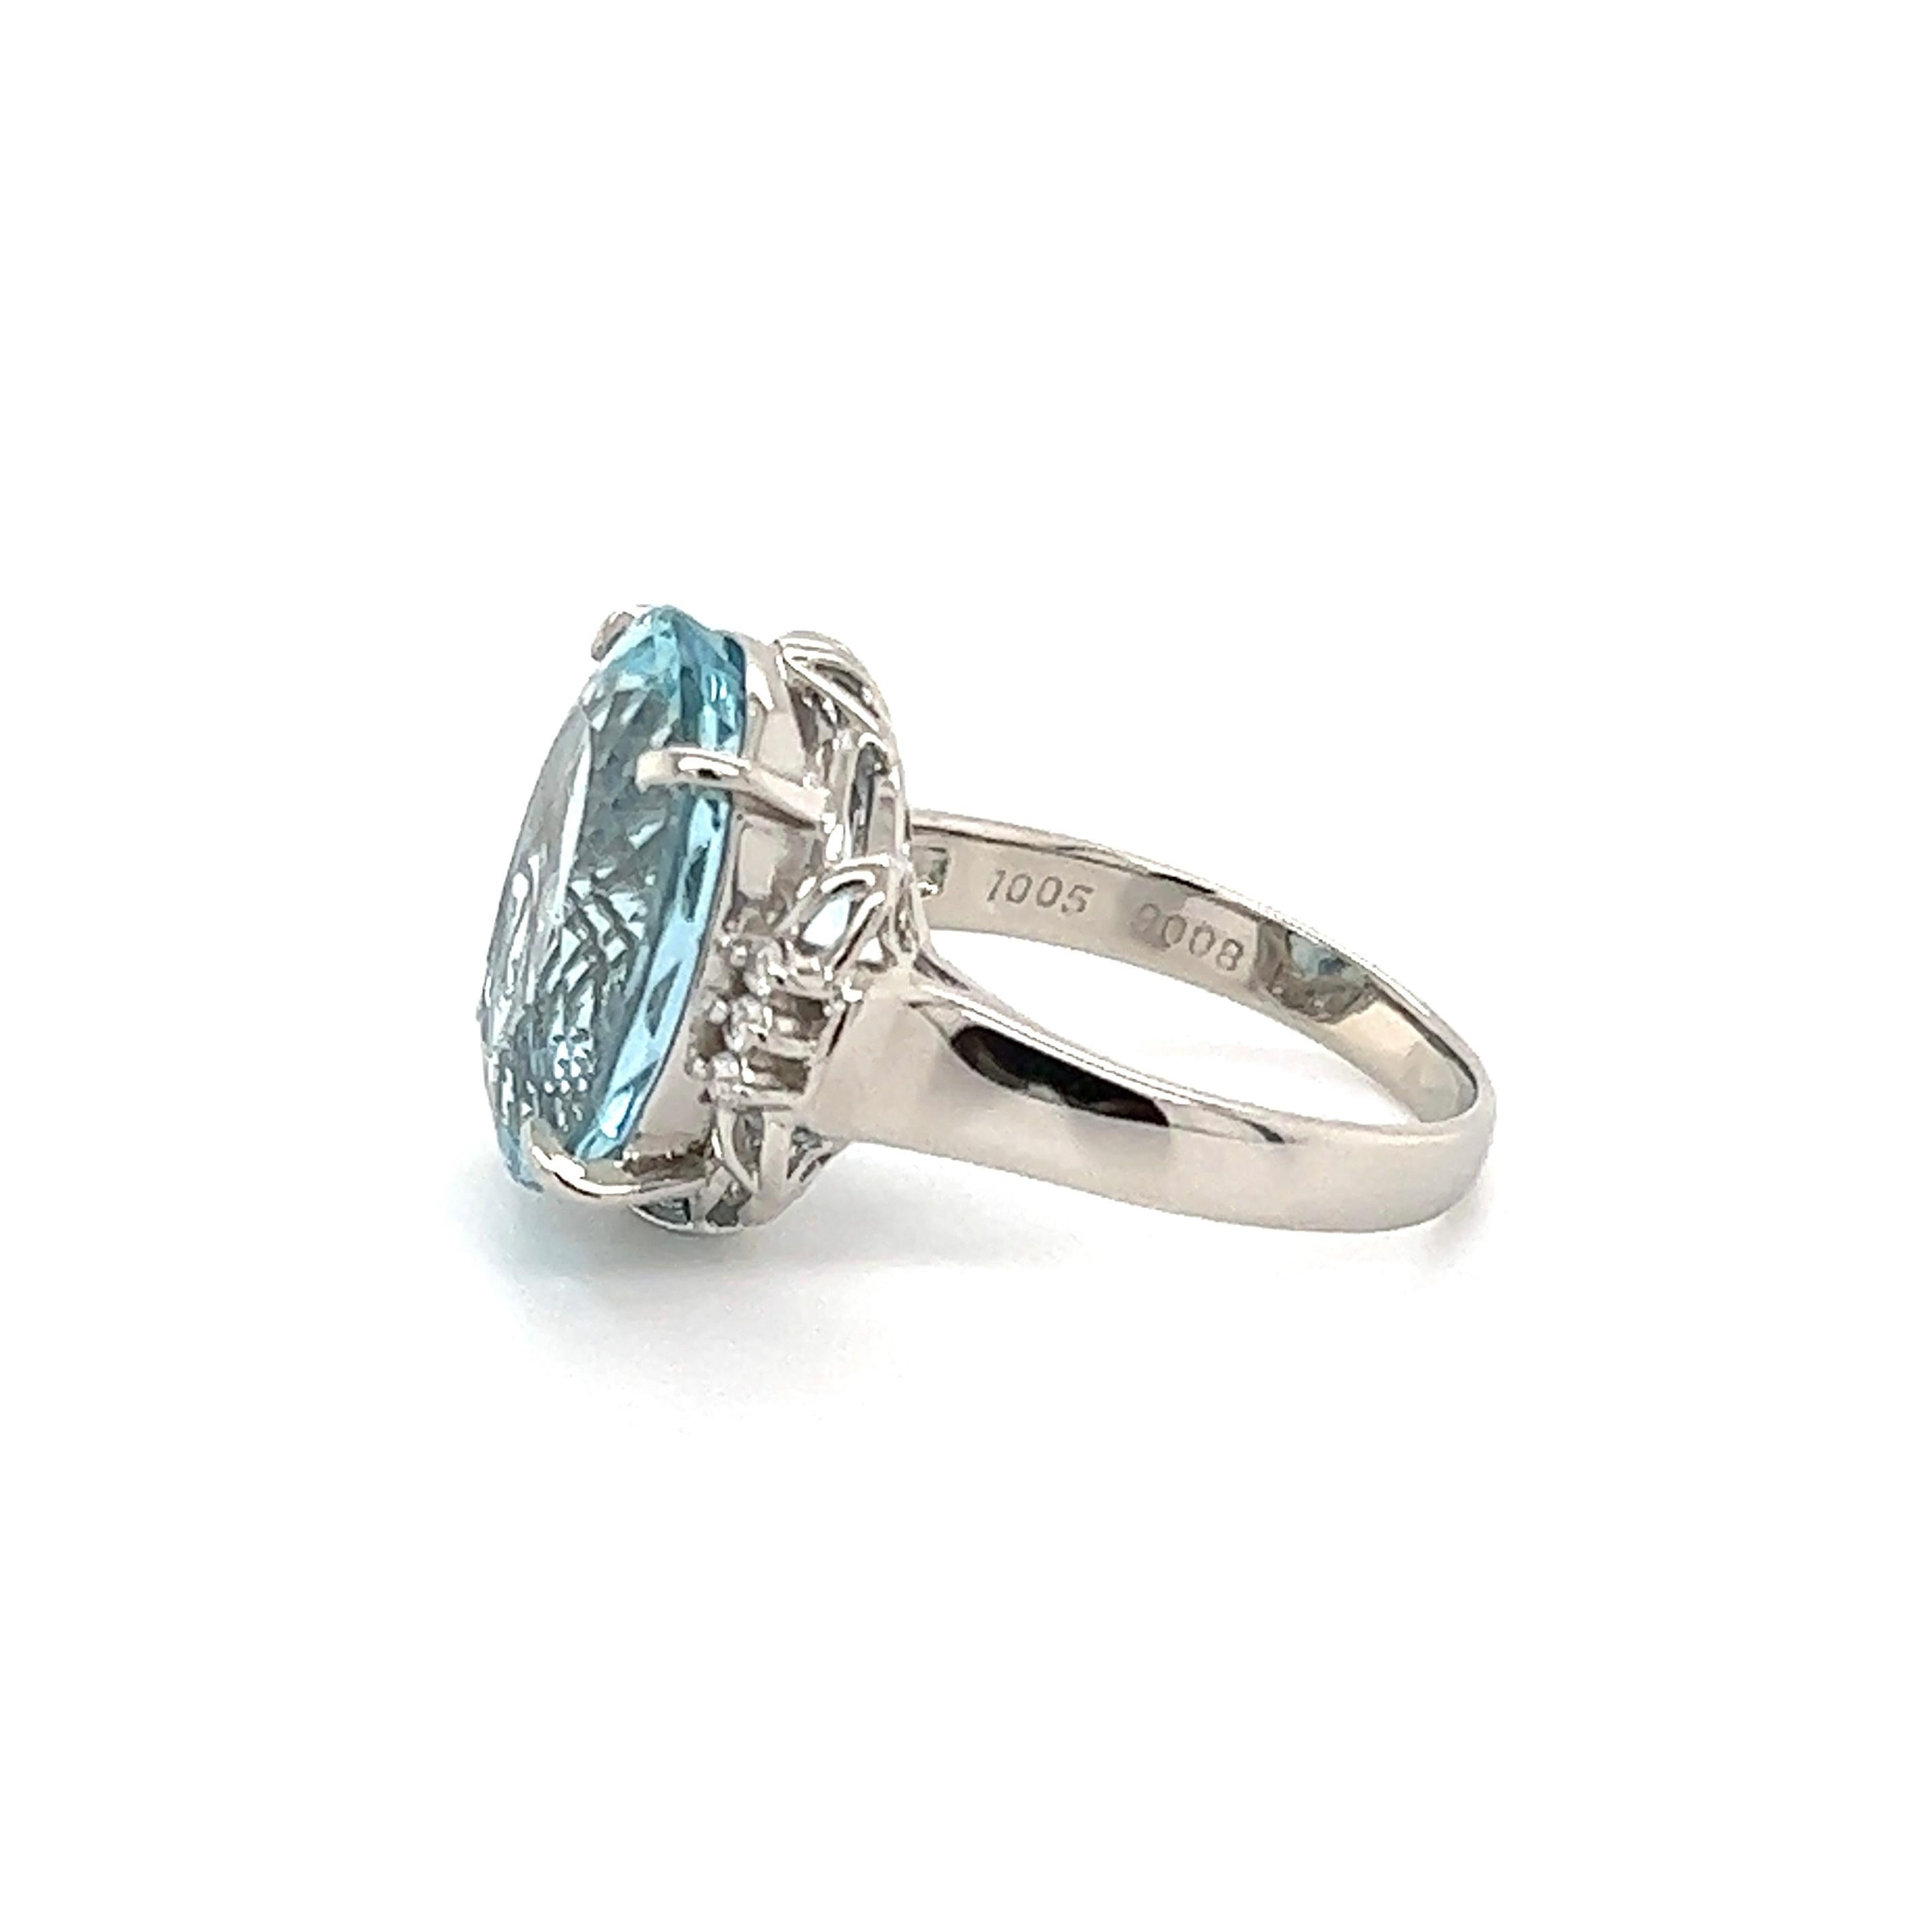 10.05 Carat Oval Aquamarine and Diamond Platinum Ring Estate Fine Jewelry For Sale 1